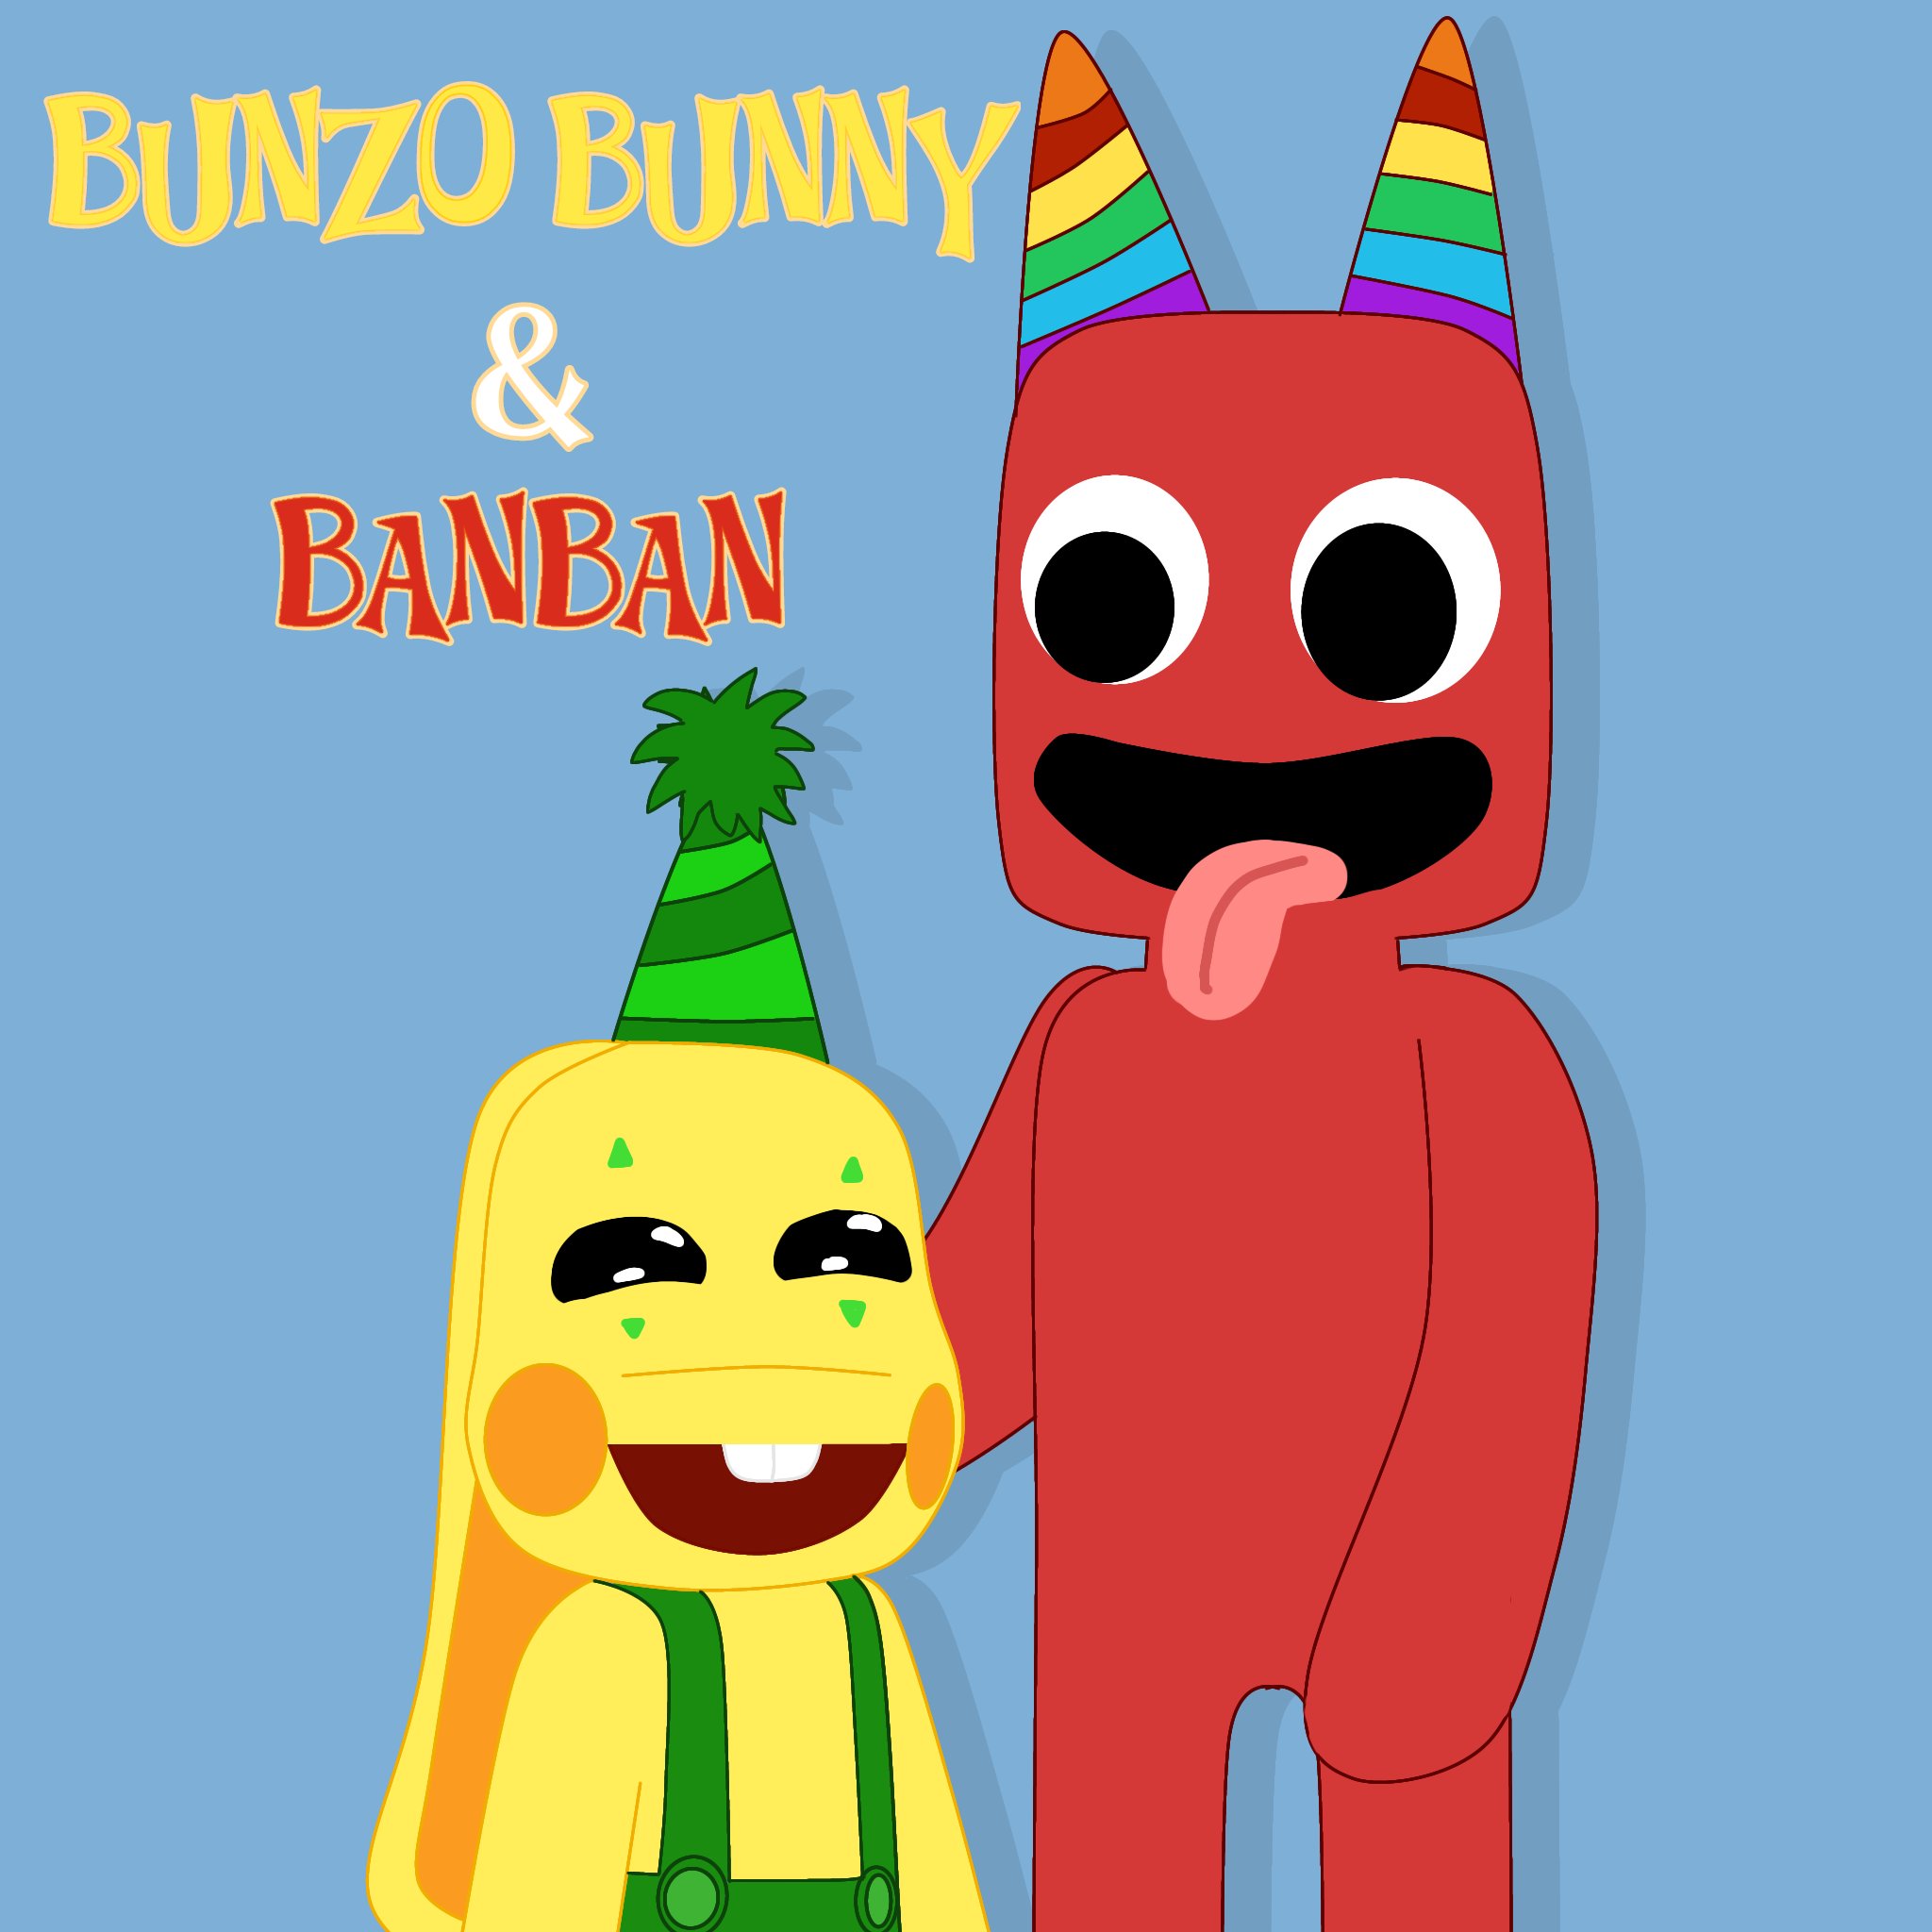 Bunzo Bunny From Poppy Playtime on Bunny-Fan-Club - DeviantArt